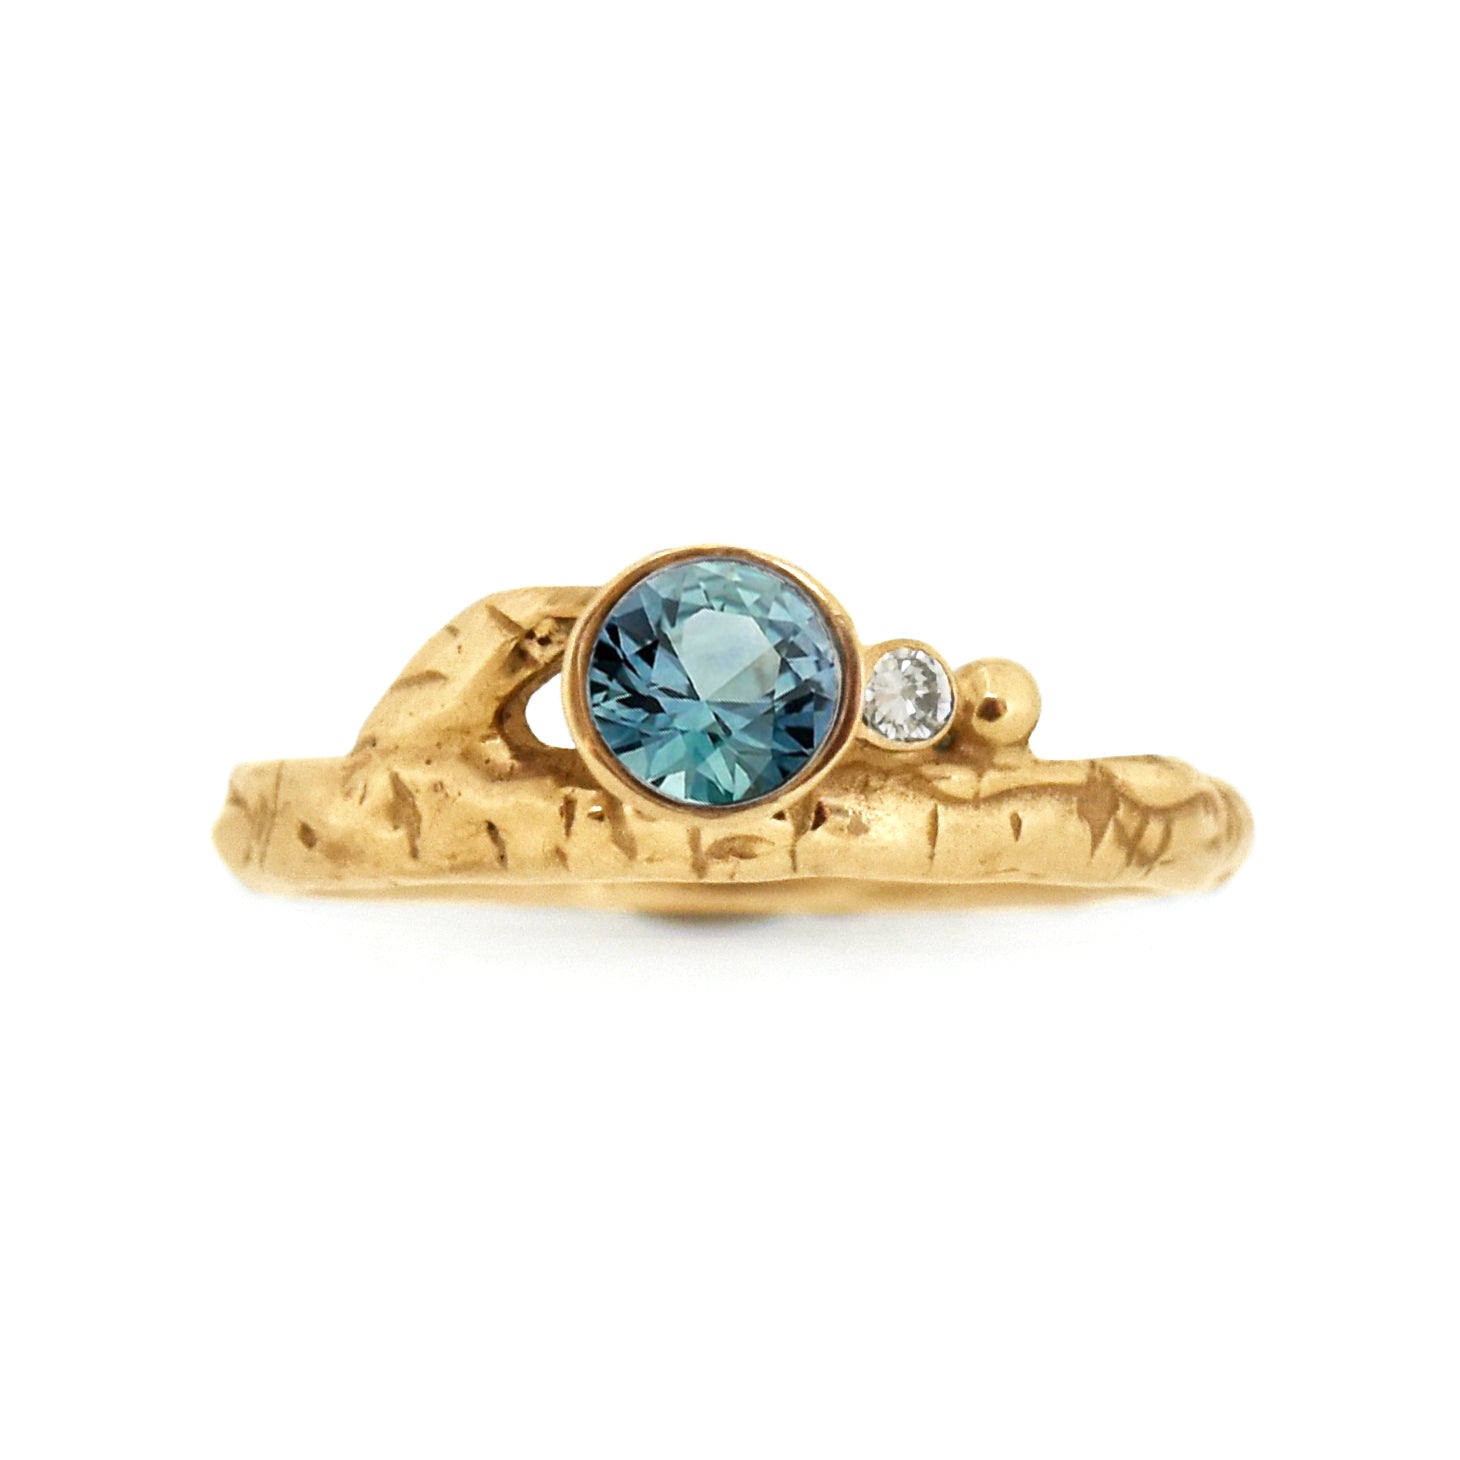 Gold Diamond Birch Twig Ring - your choice of 5mm stone & gold - Wedding Ring Moissanite / 18K Palladium White Gold Moissanite / 14K Rose Gold 6287 - handmade by Beth Millner Jewelry